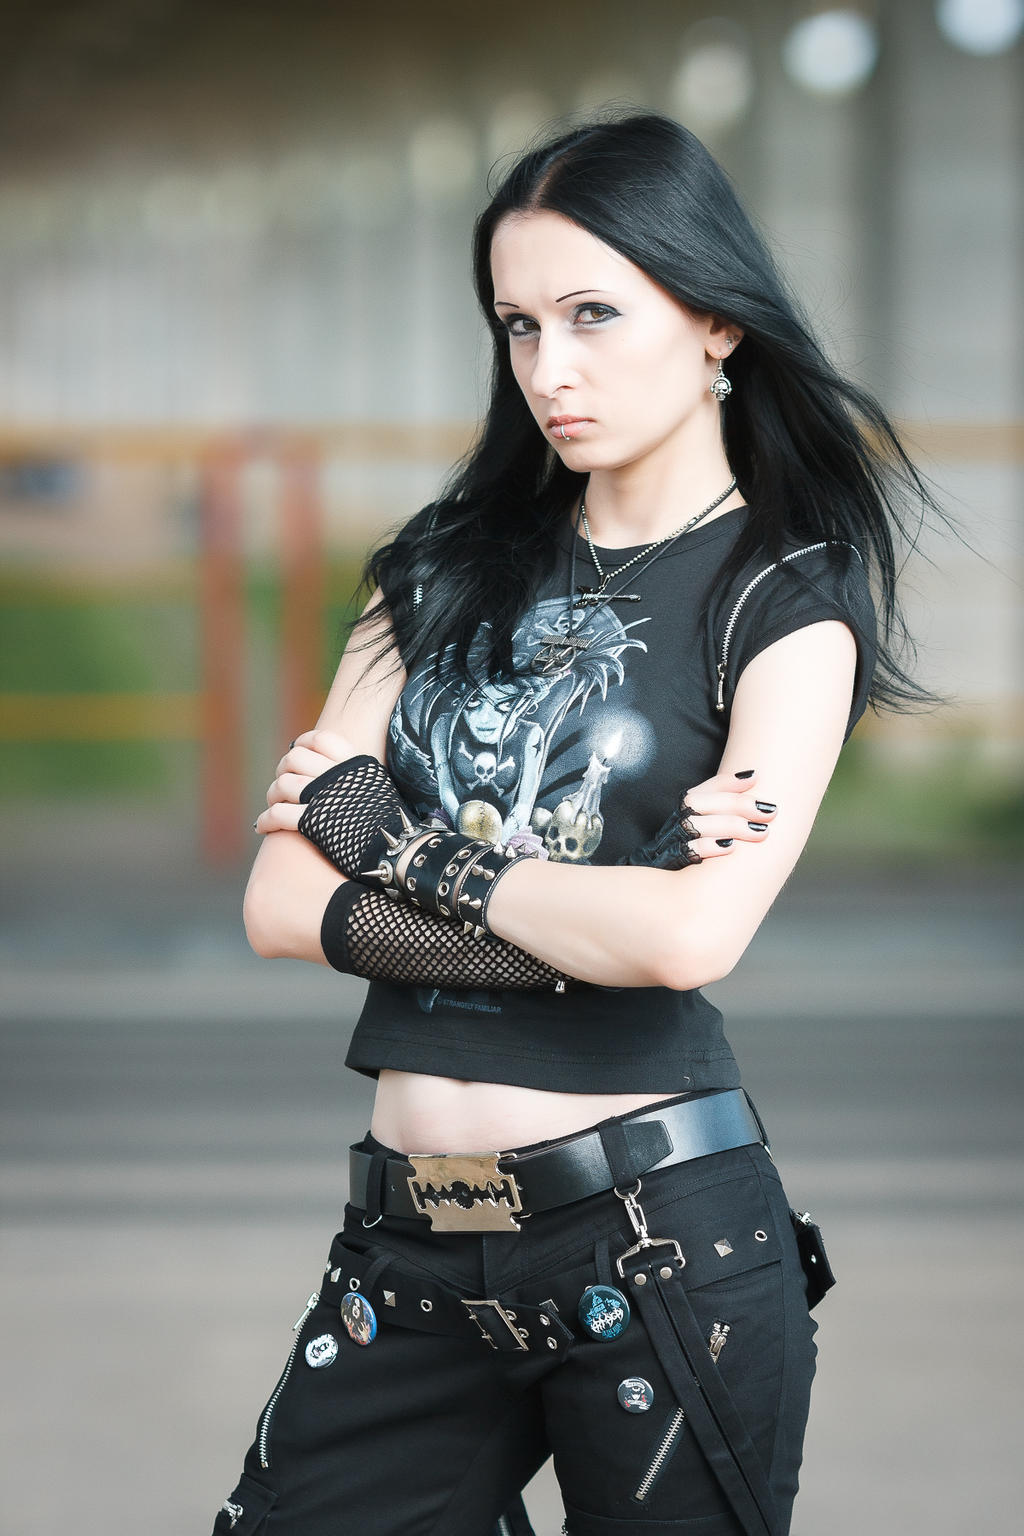 Metal Girl by AshielNeronamyde on DeviantArt